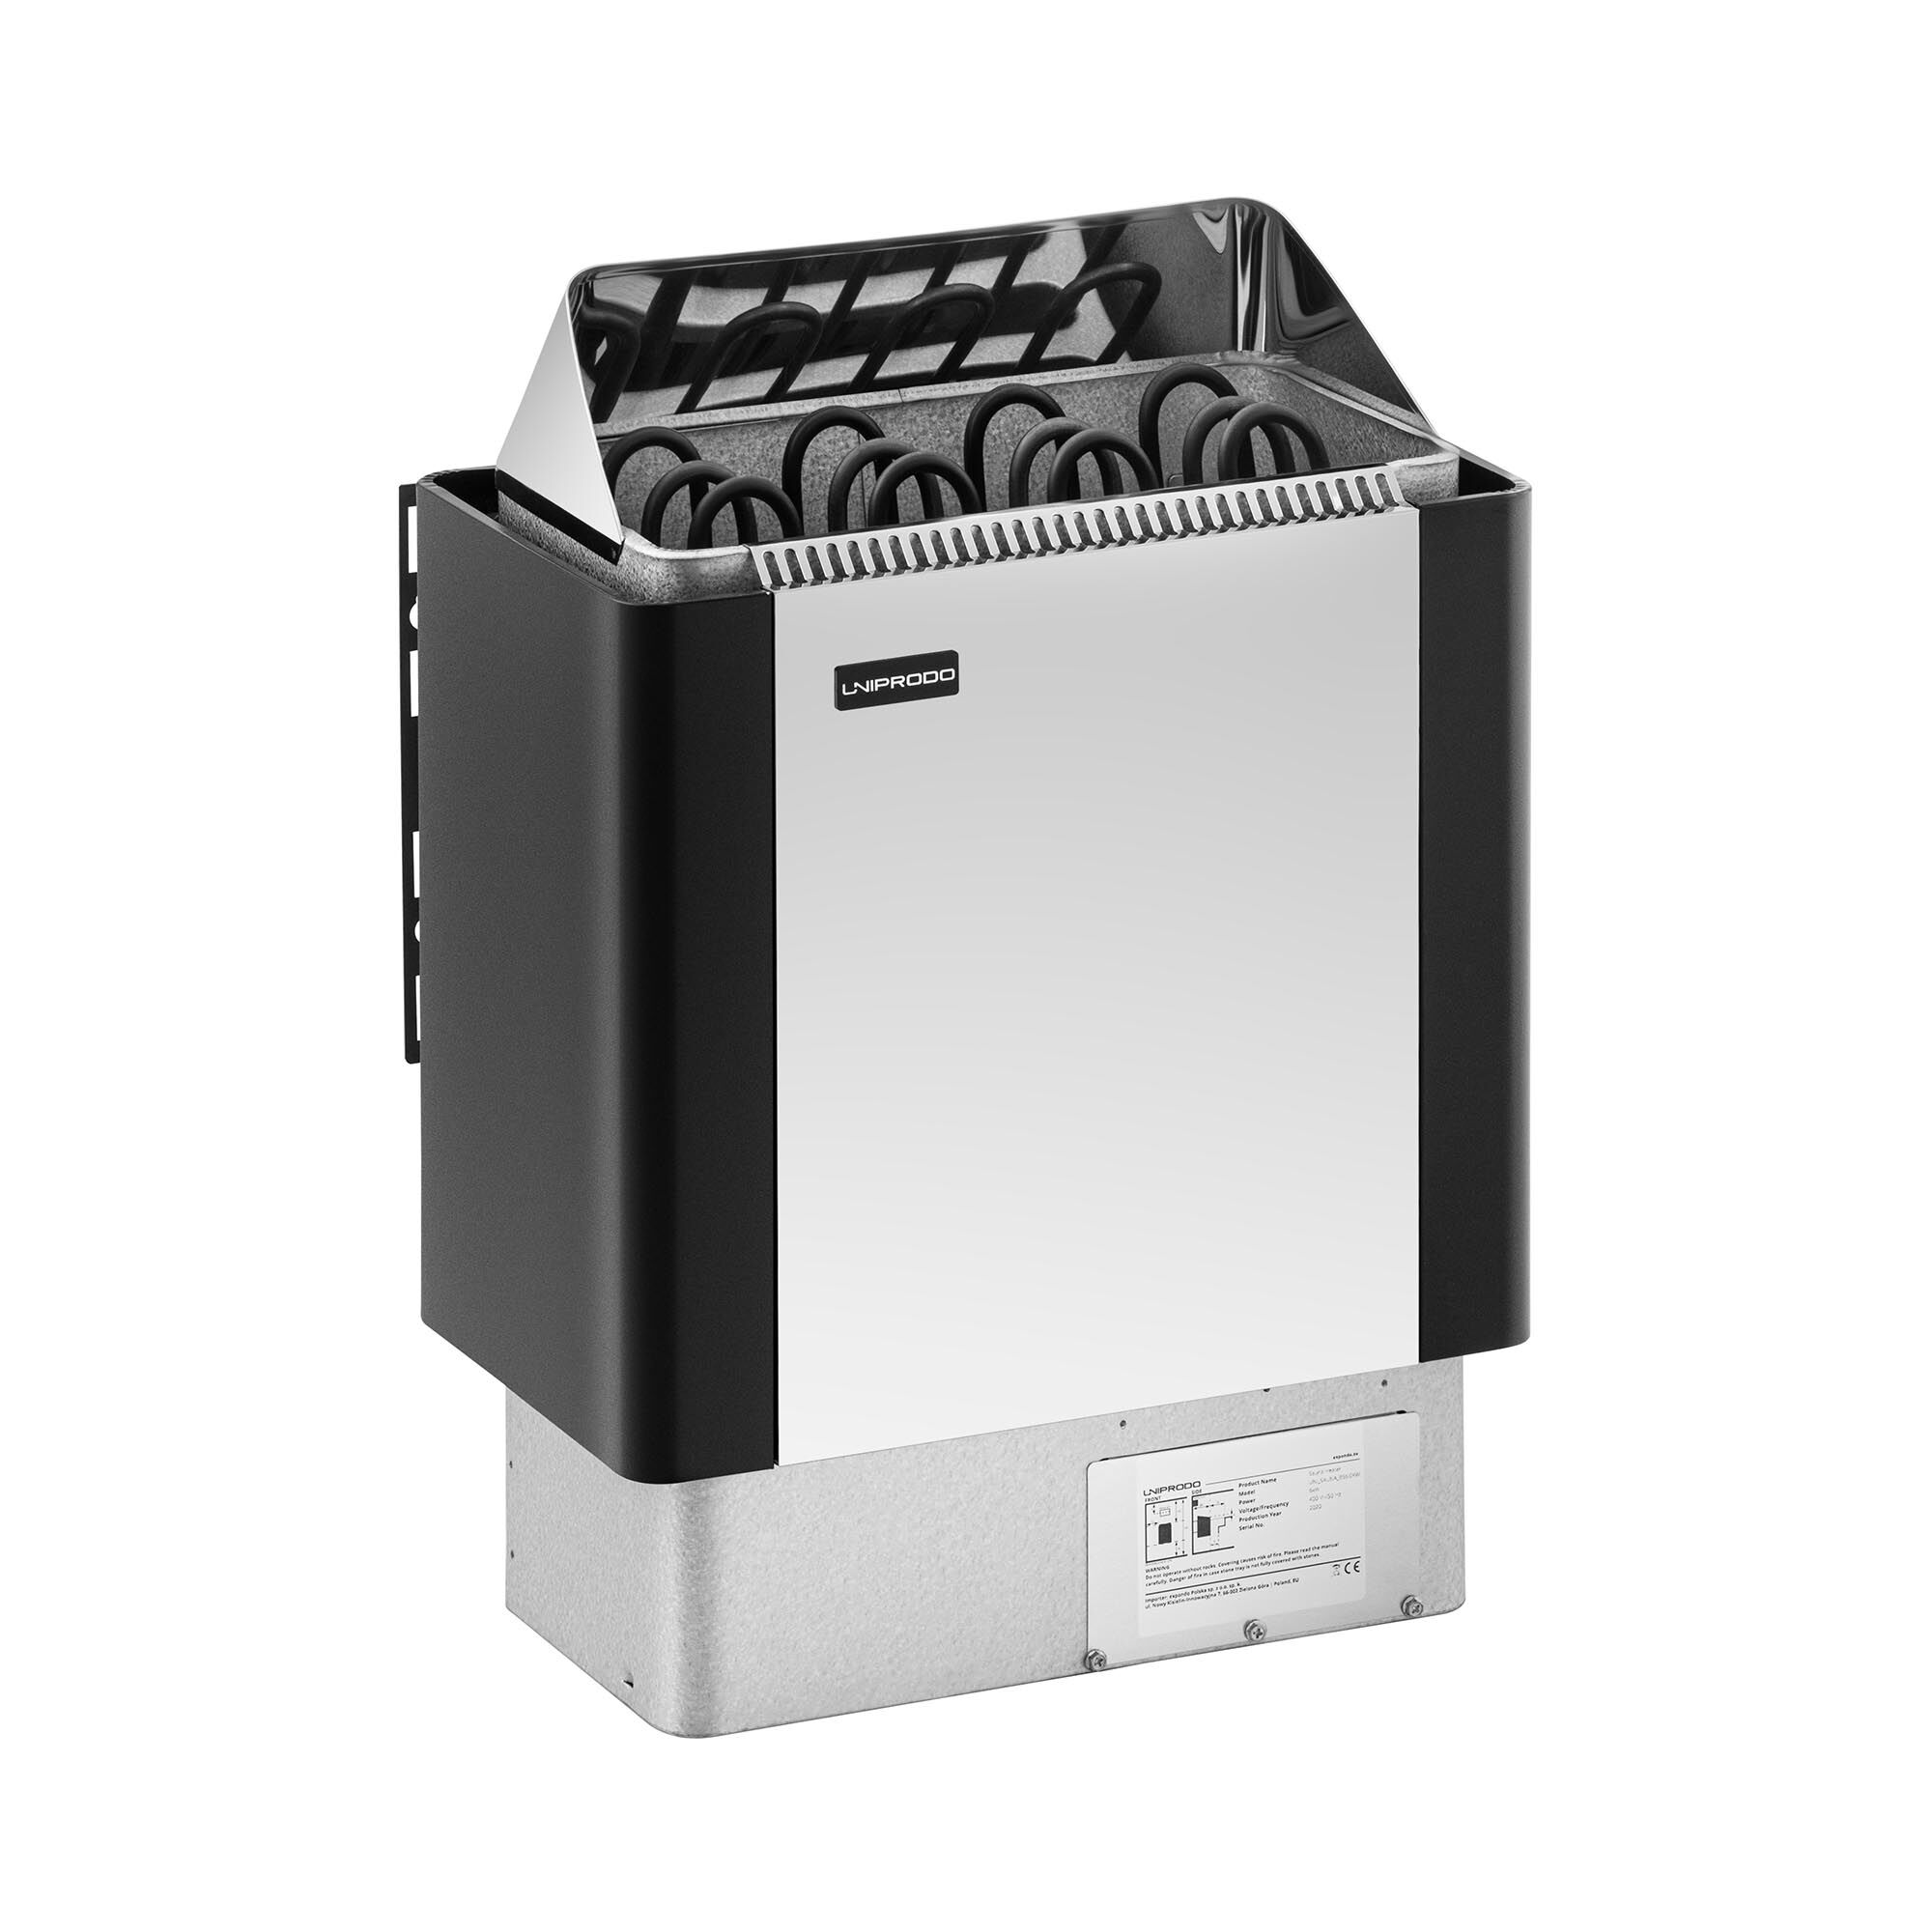 Uniprodo Saunaofen - 6 kW - 30 bis 110 °C - Edelstahlblende